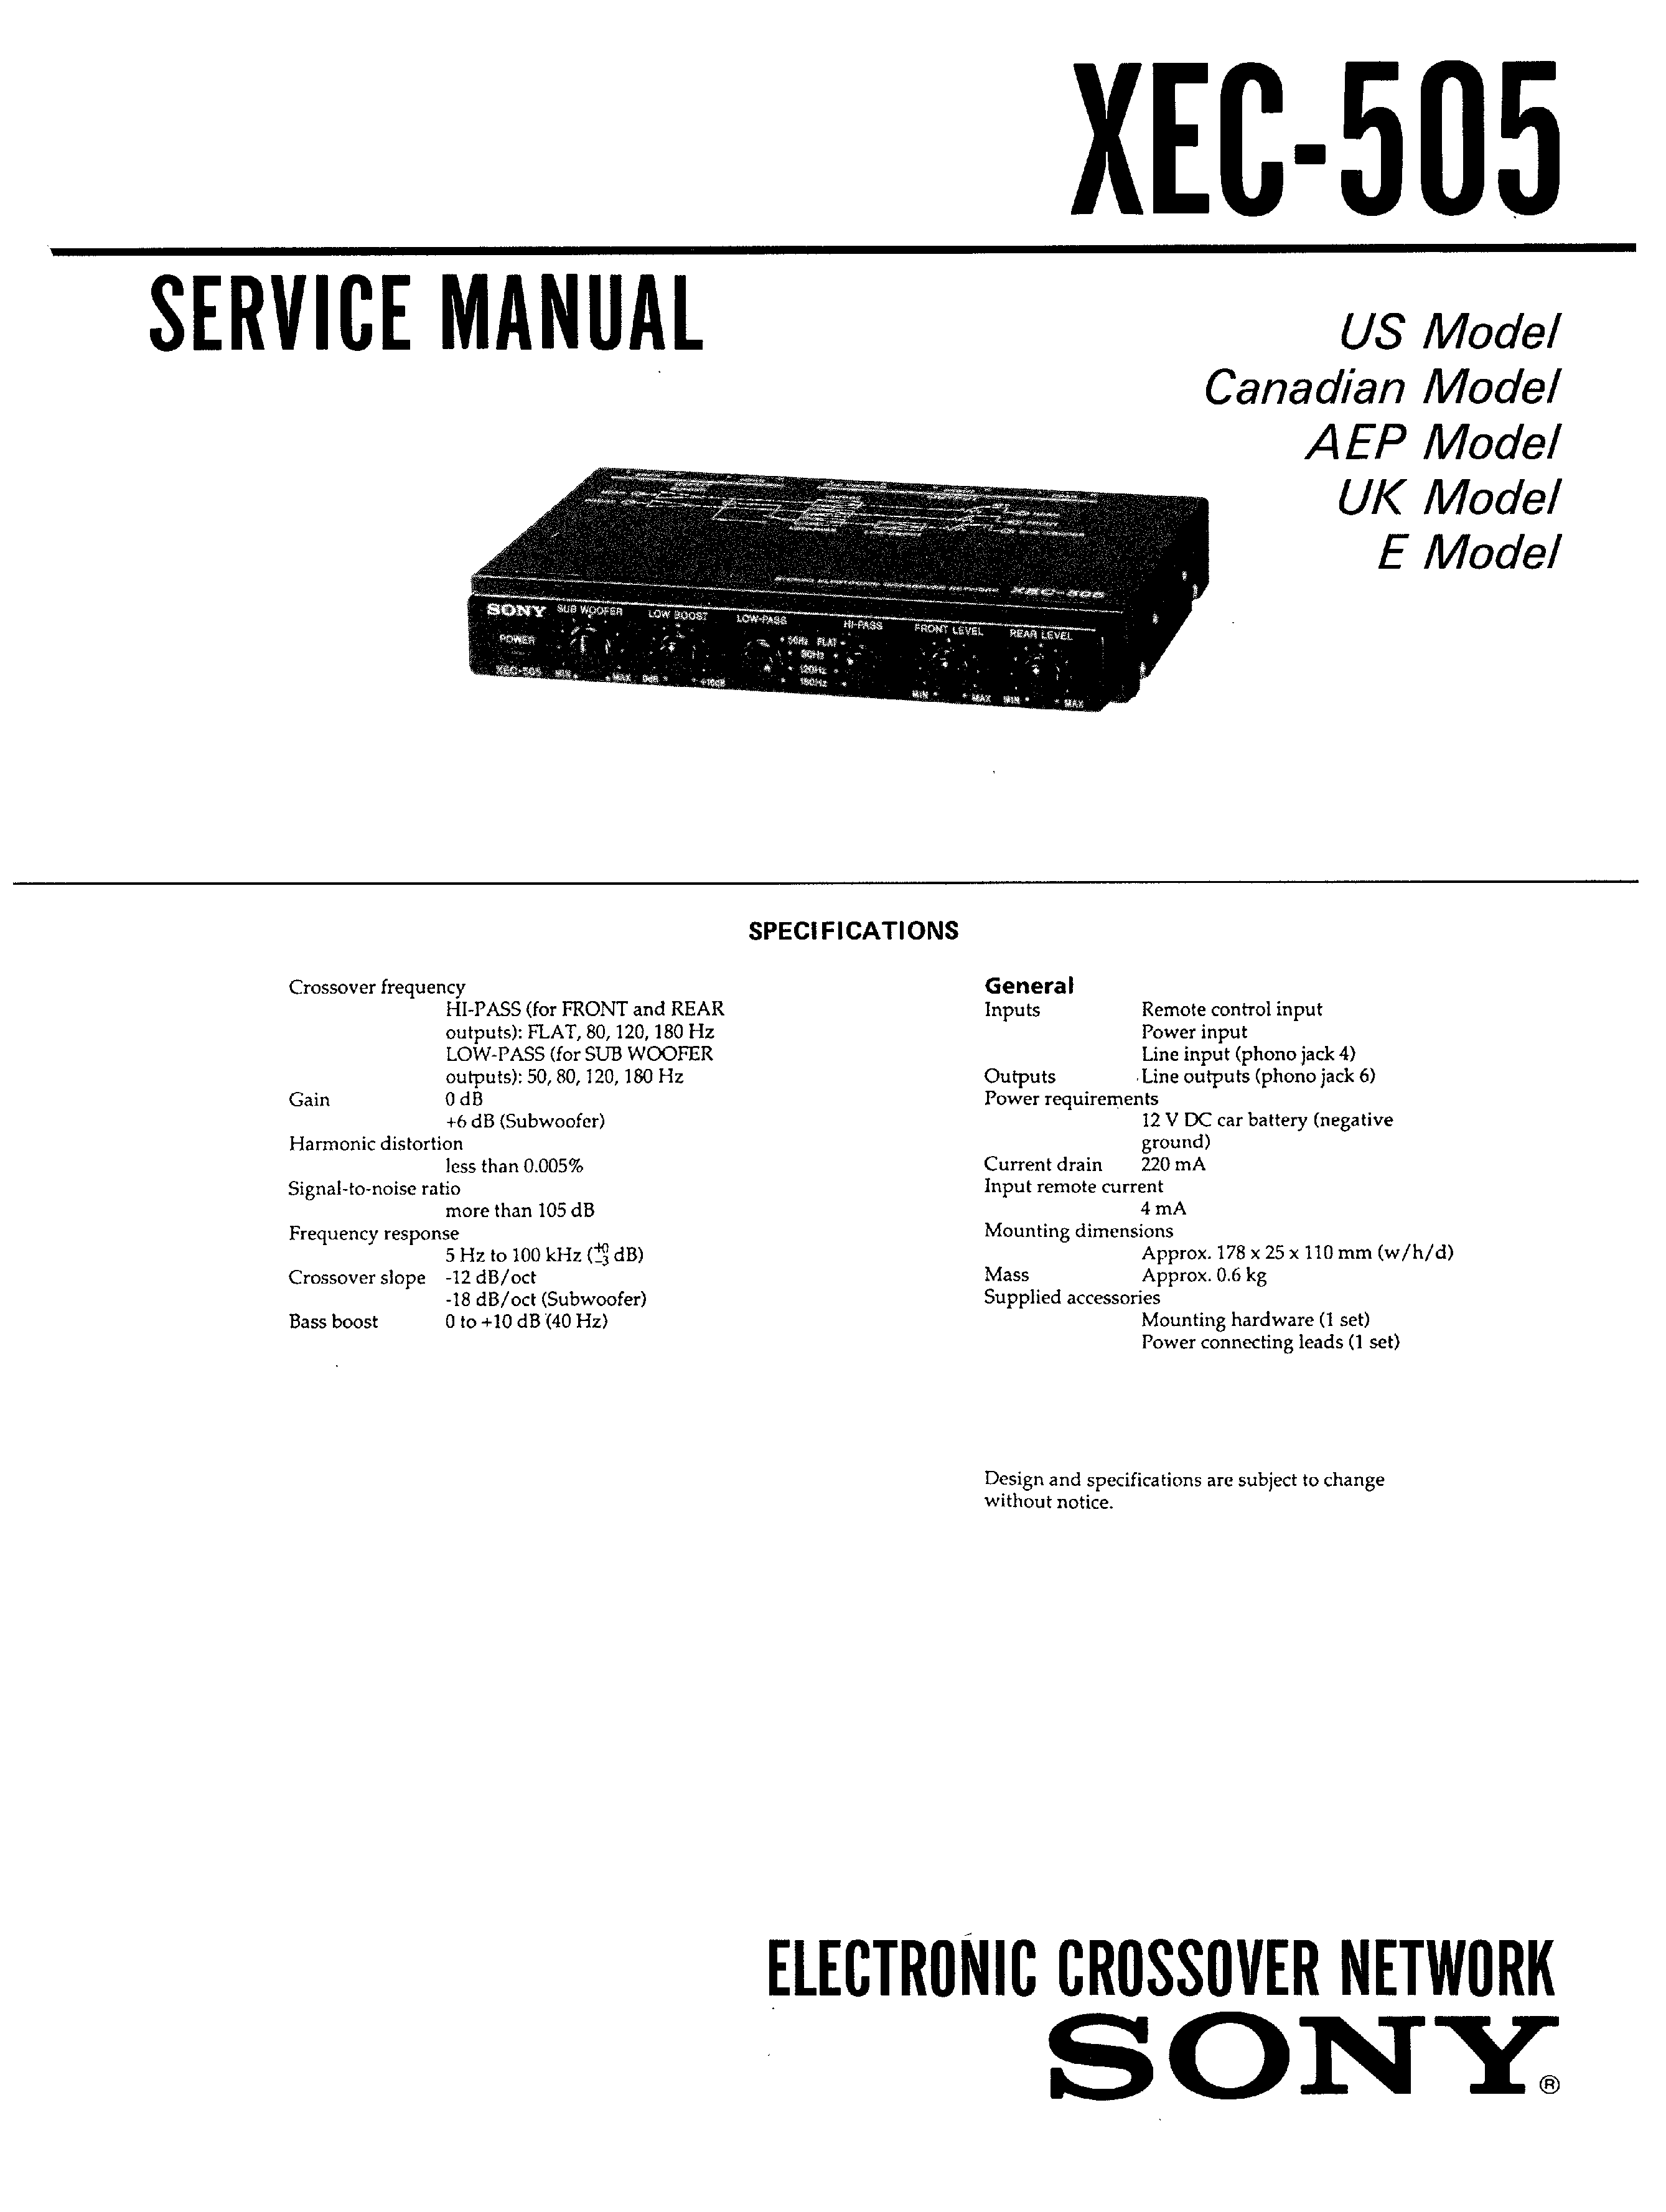 SONY XEC-505 - Service Manual Immediate Download